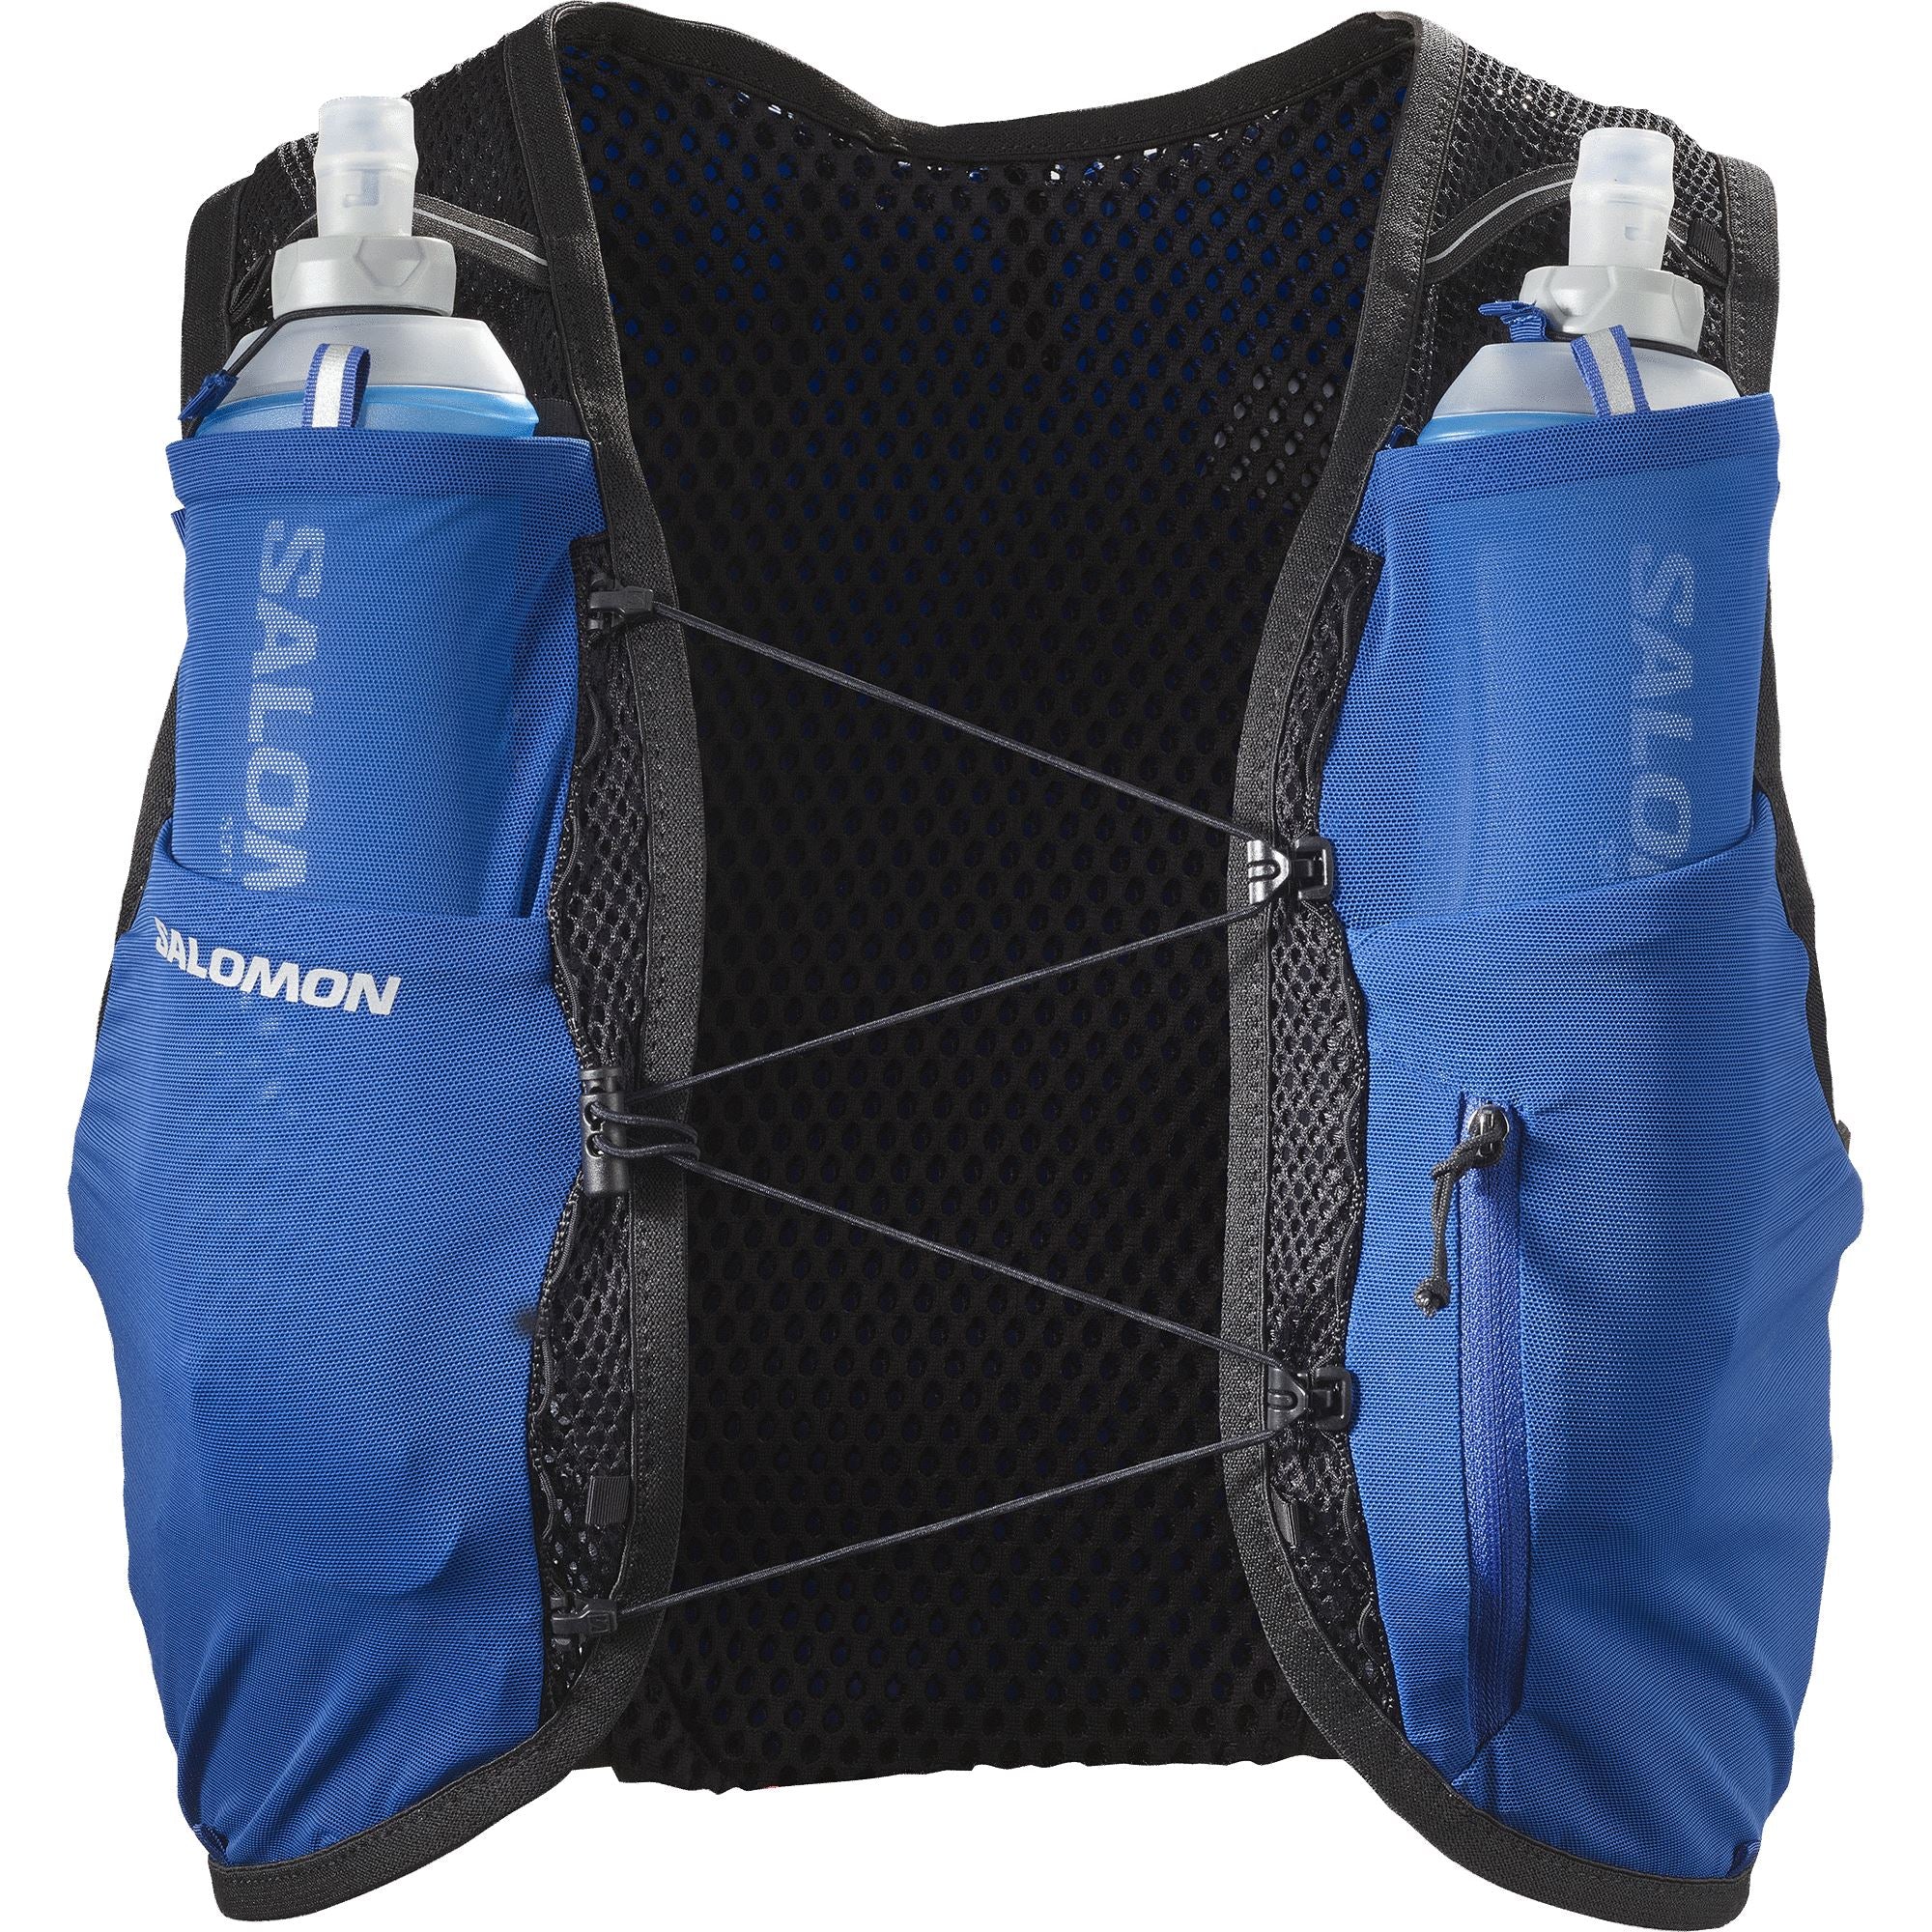 Salomon Active Skin 8 Set Running Vest Surf The Web/Black S 